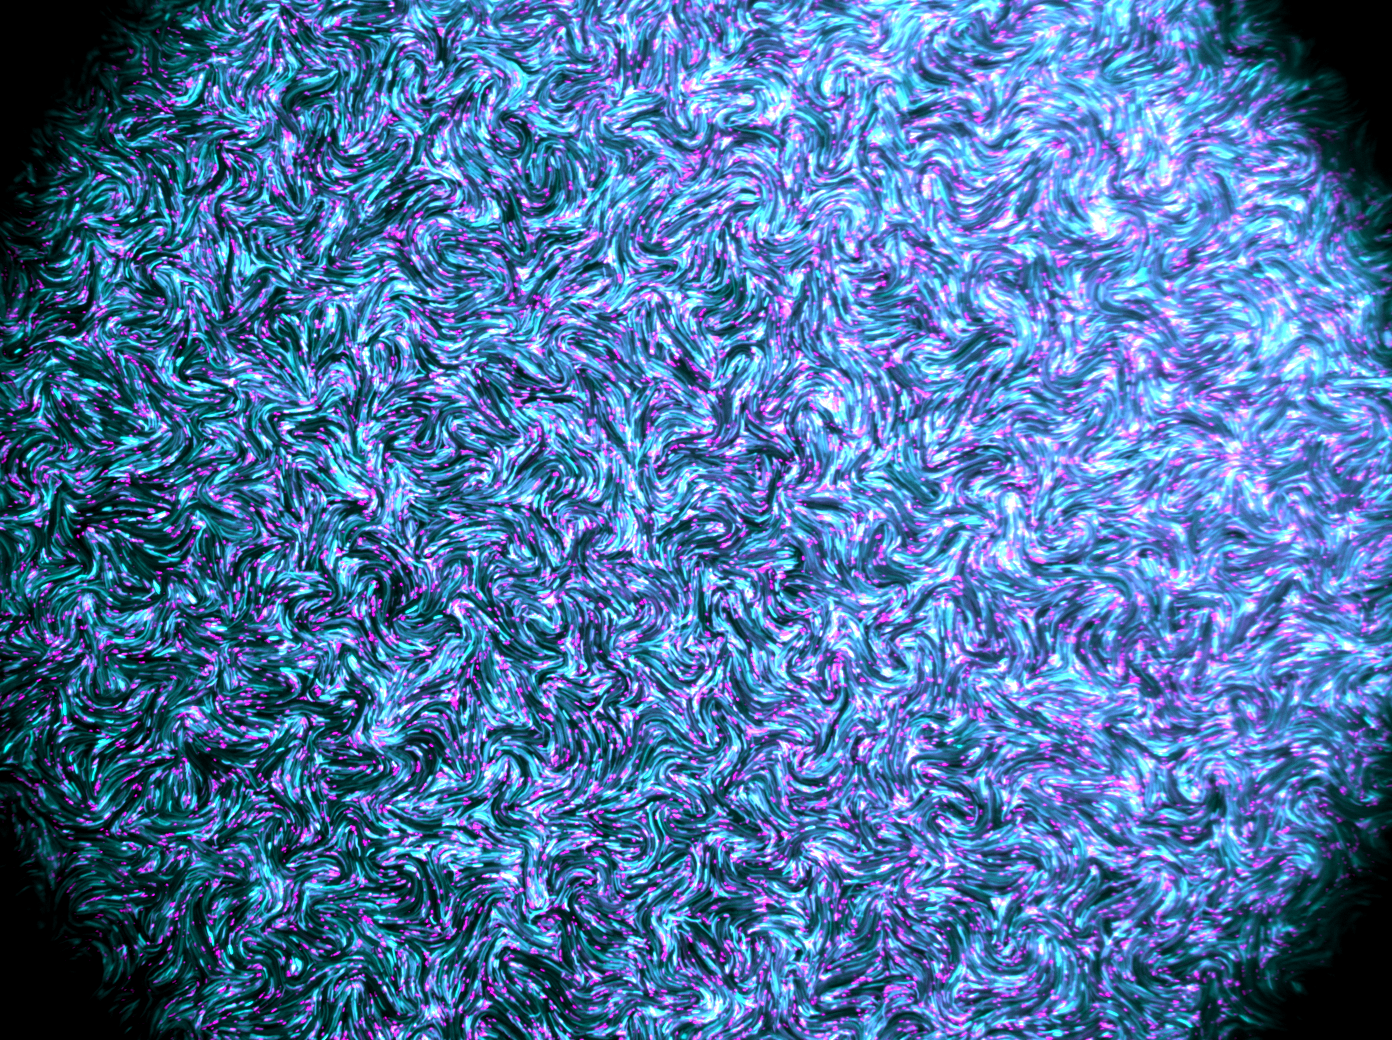 A fluoresce image of E. coli bacteria.